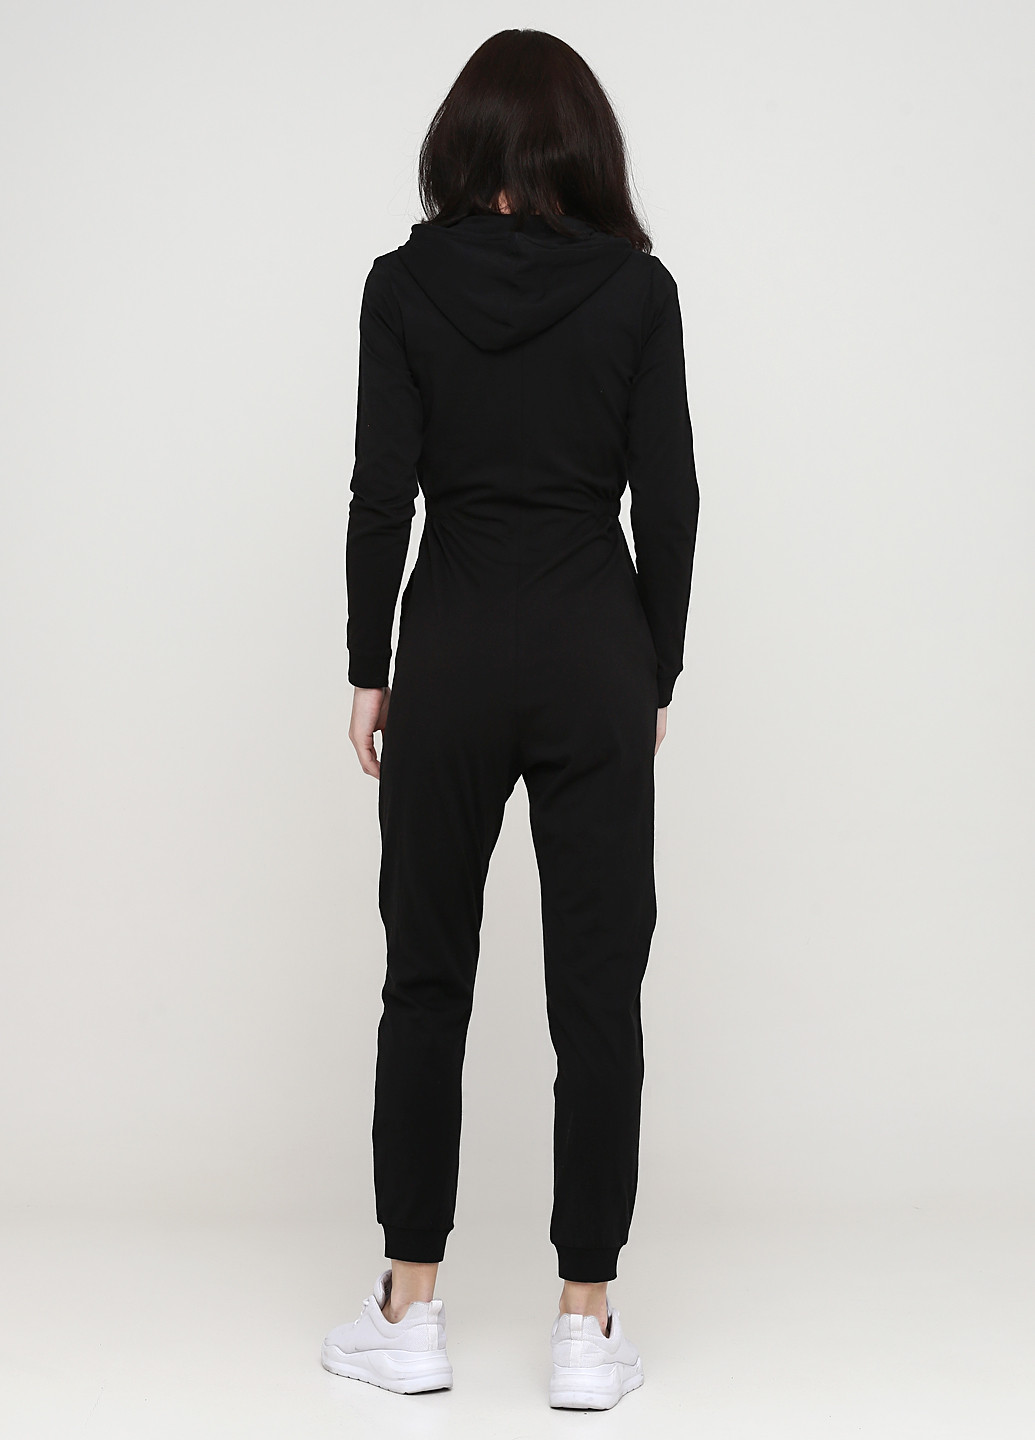 Комбинезон H&M комбинезон-брюки рисунок чёрный кэжуал трикотаж, хлопок